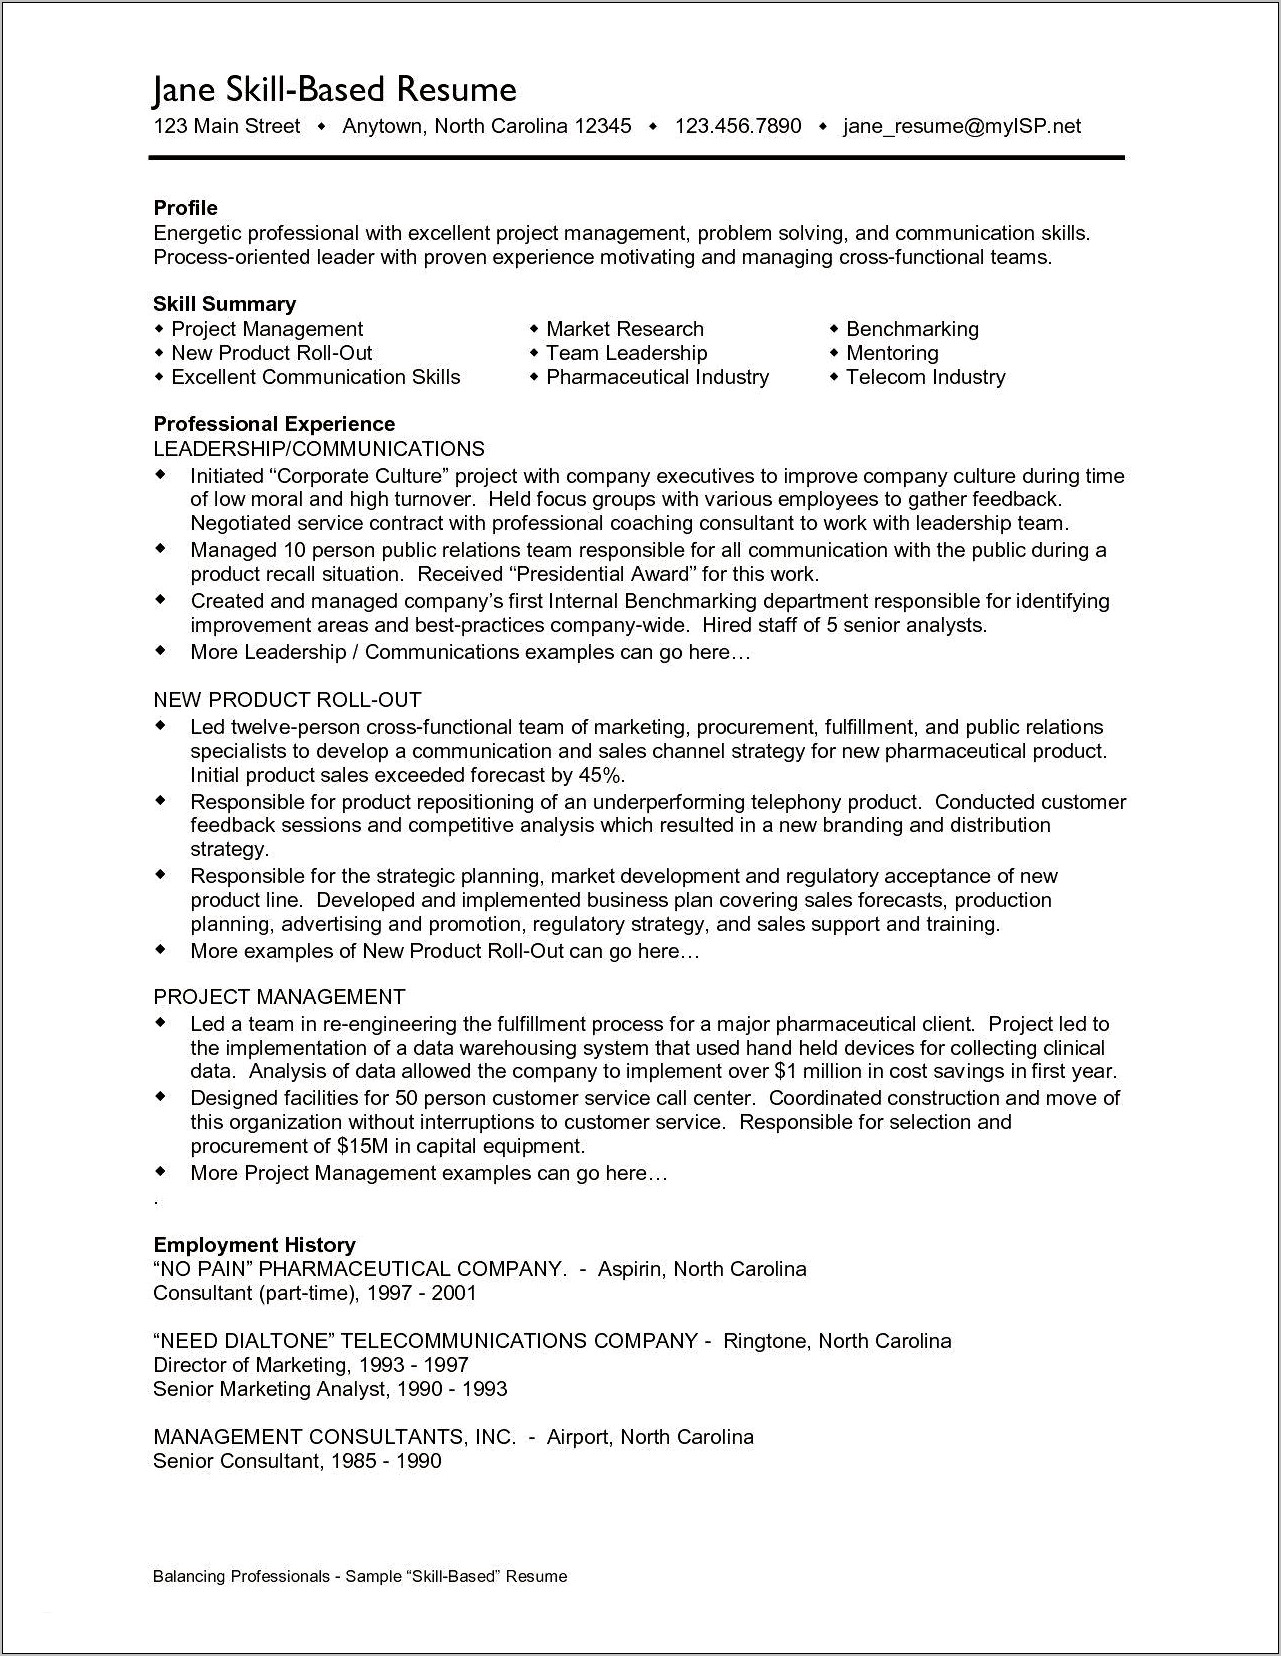 Resume Summary About Interpersonal Skills